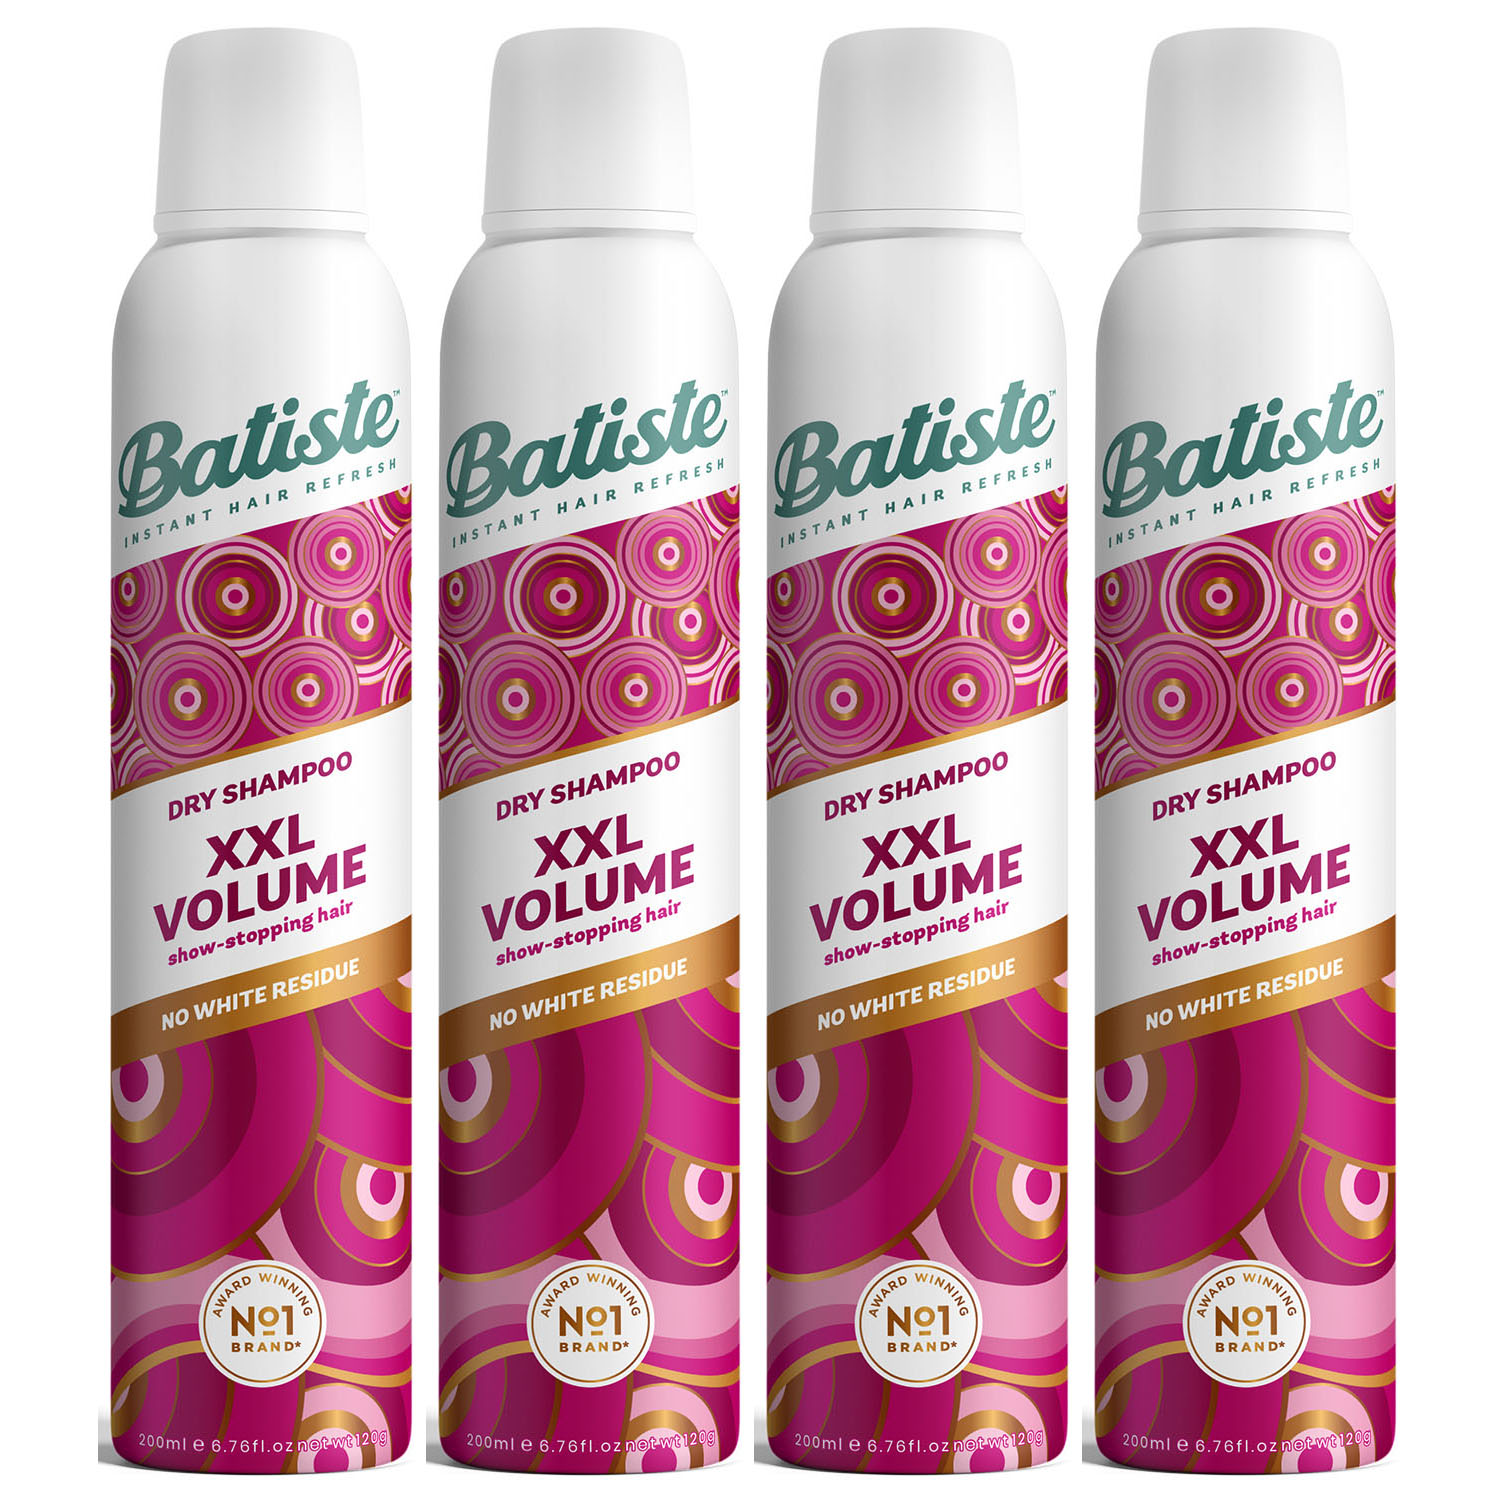 Batiste Комплект XXL Volume Spray Спрей для экстра объема волос 4 шт х 200 мл (Batiste, Stylist) цена и фото